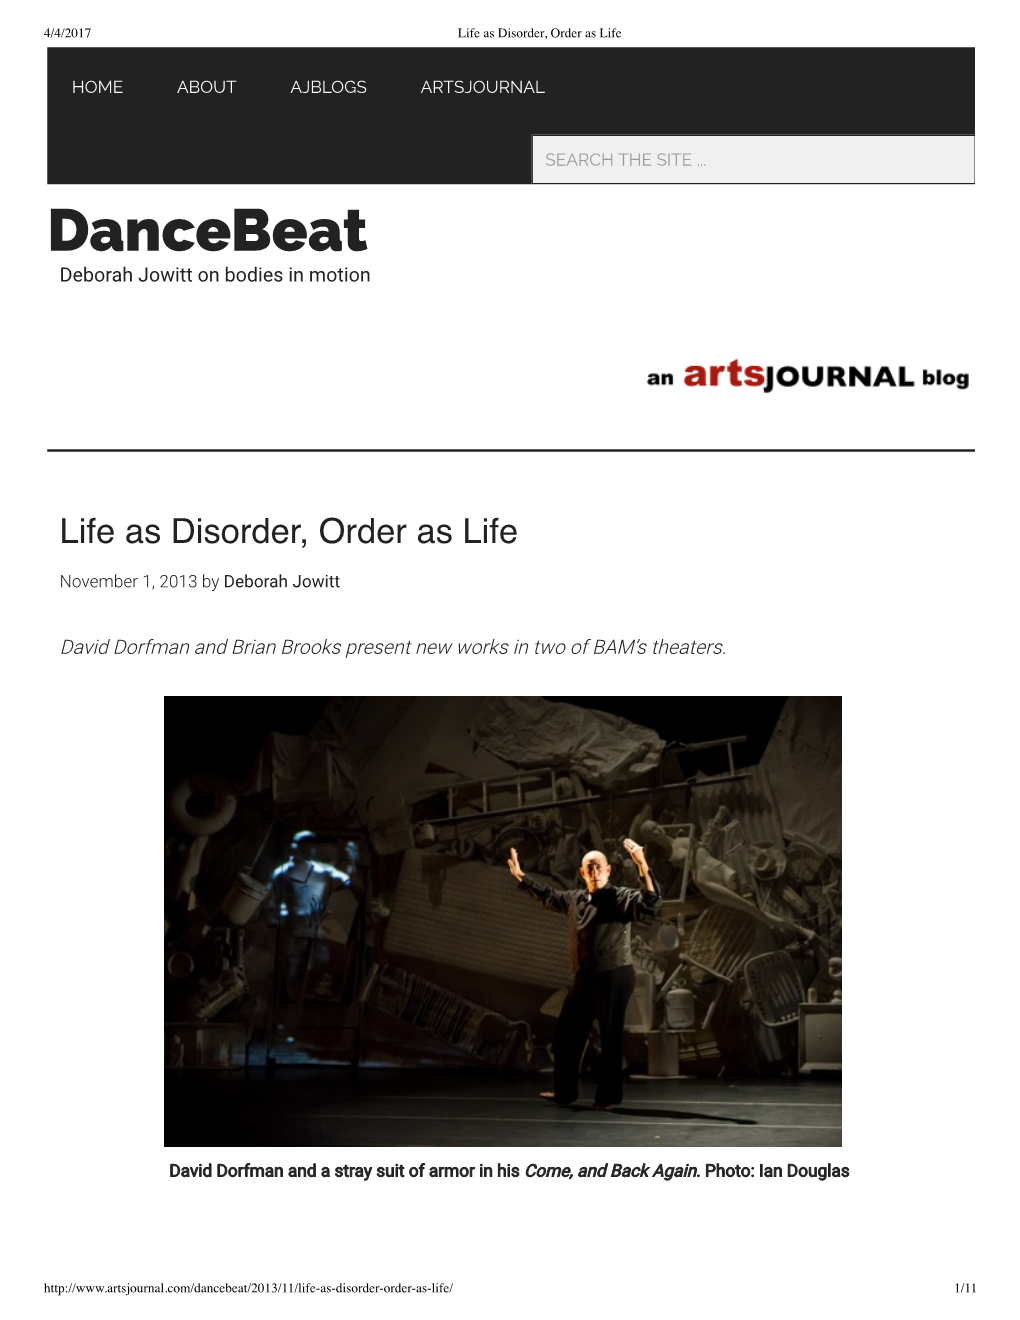 Dancebeat Deborah Jowitt on Bodies in Motion